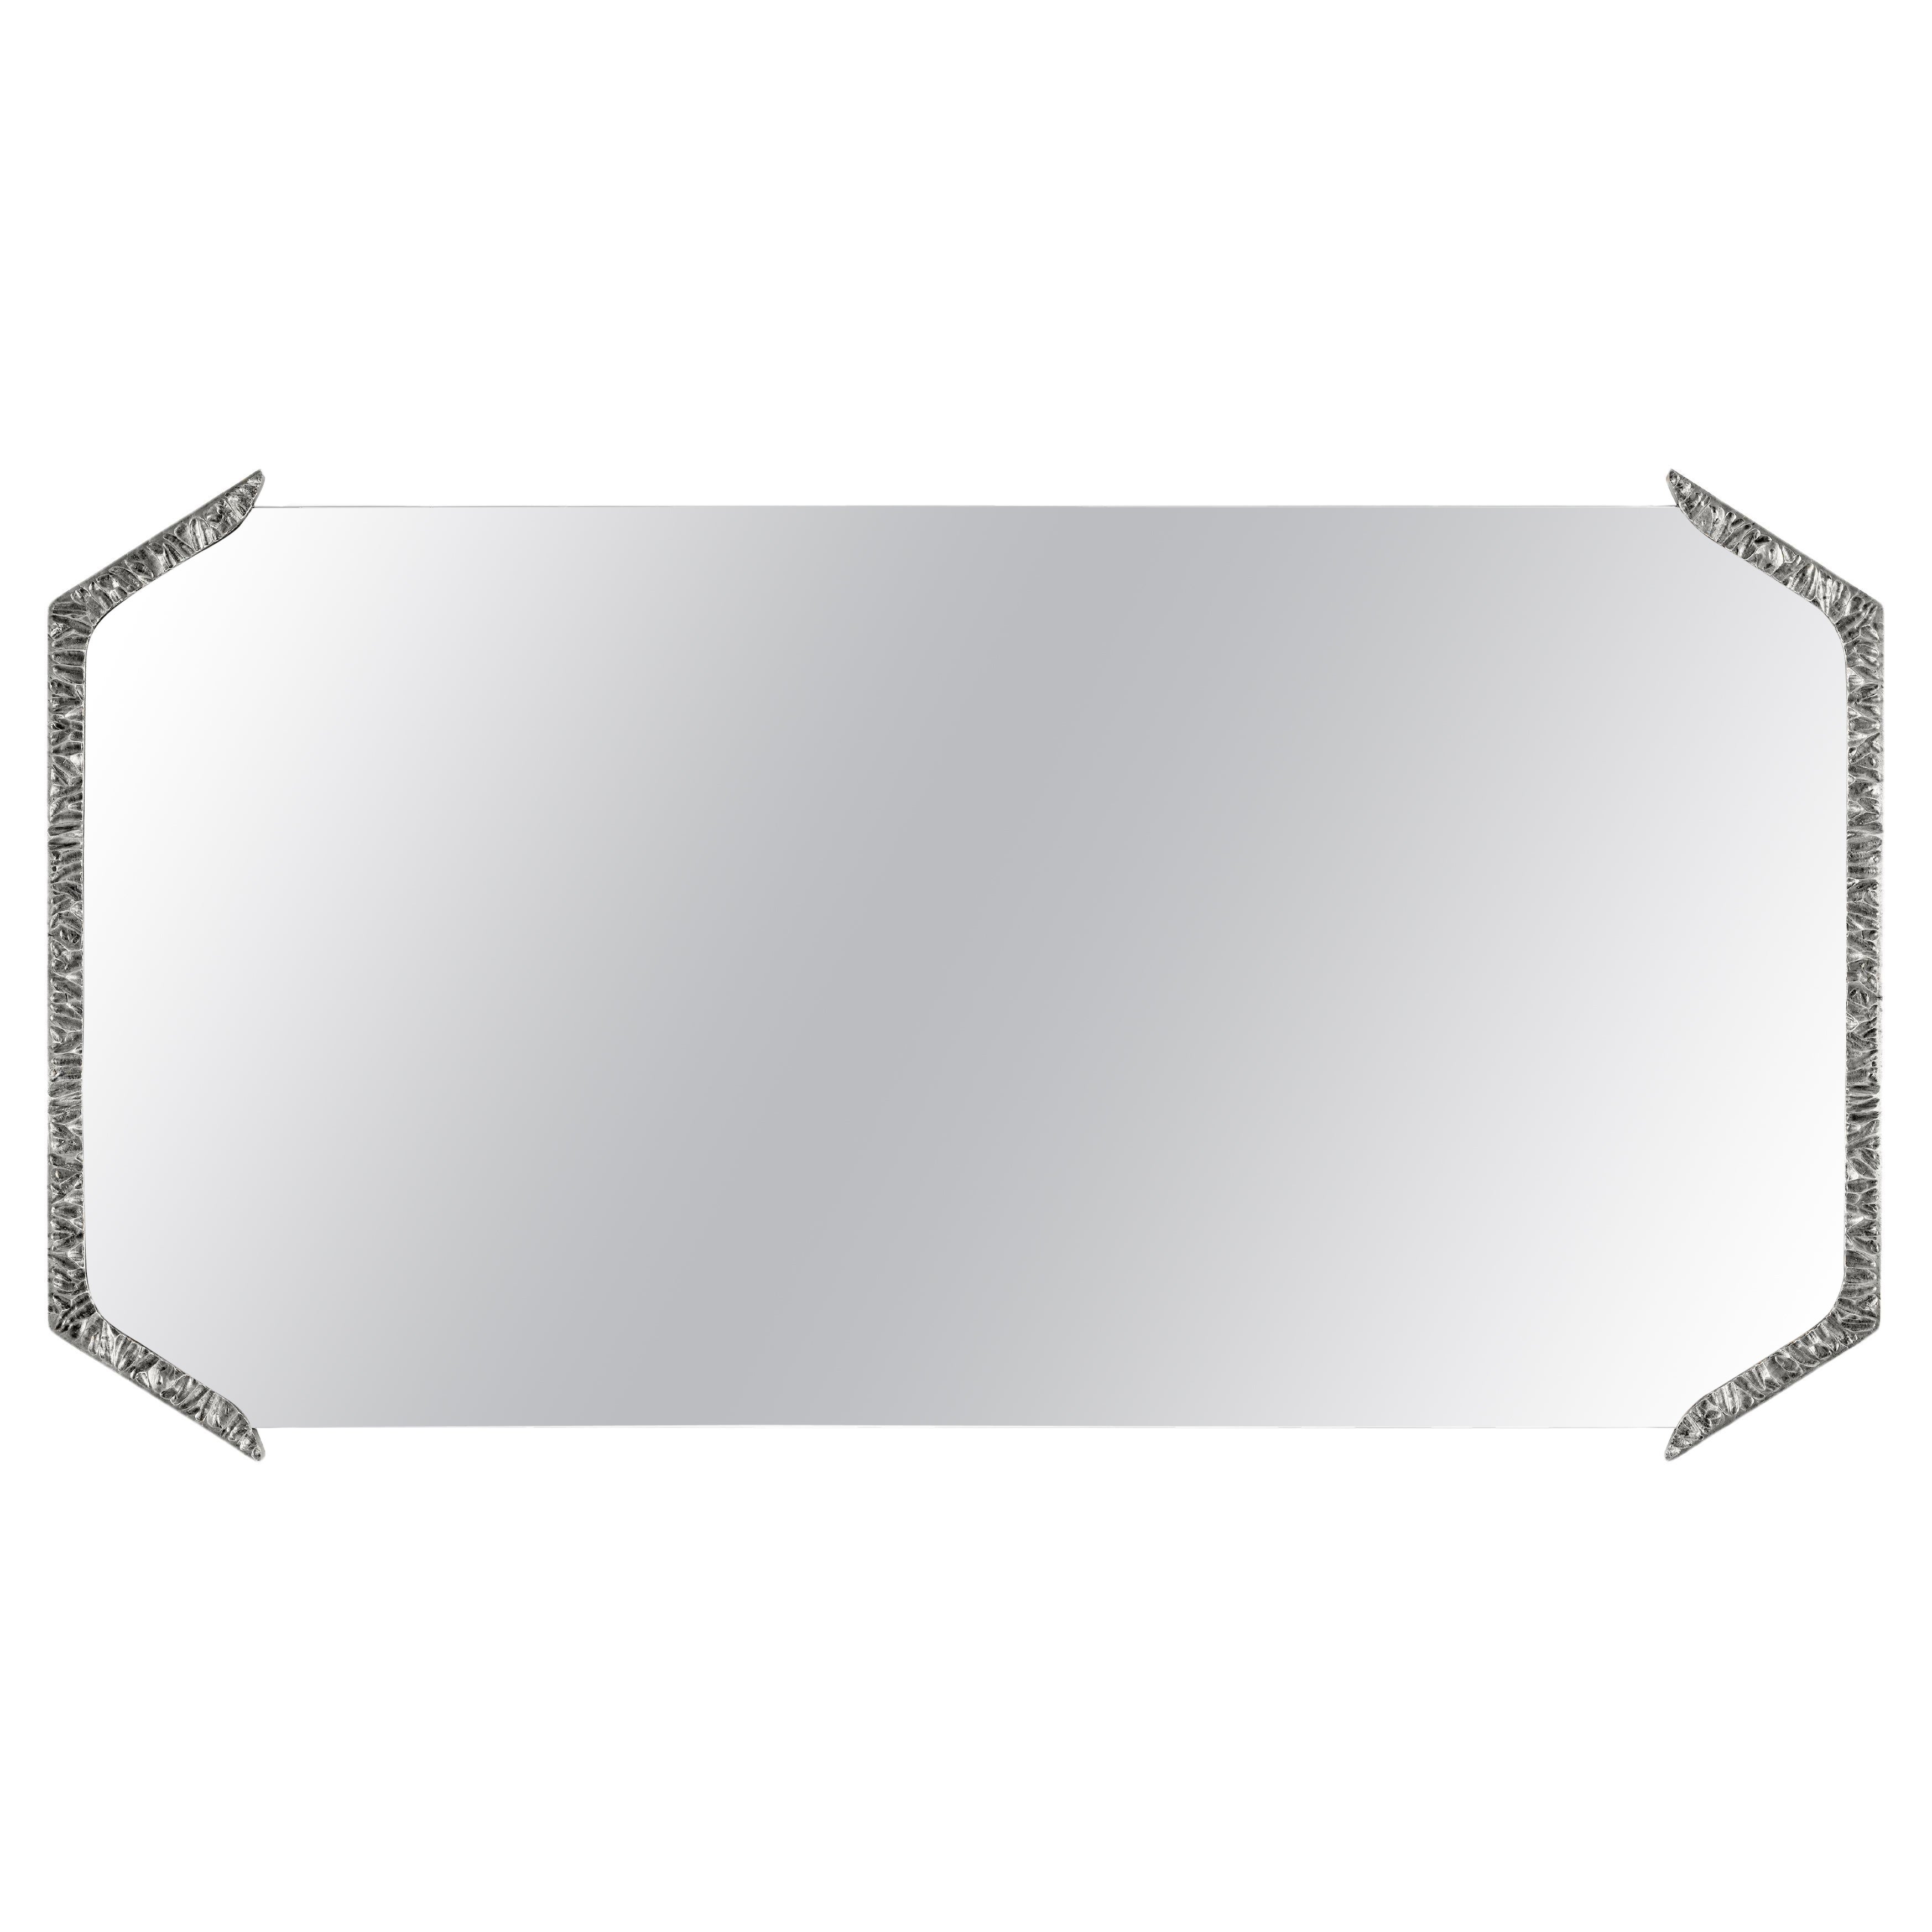 Miroir rectangulaire Alentejo Nickel par InsidherLand en vente